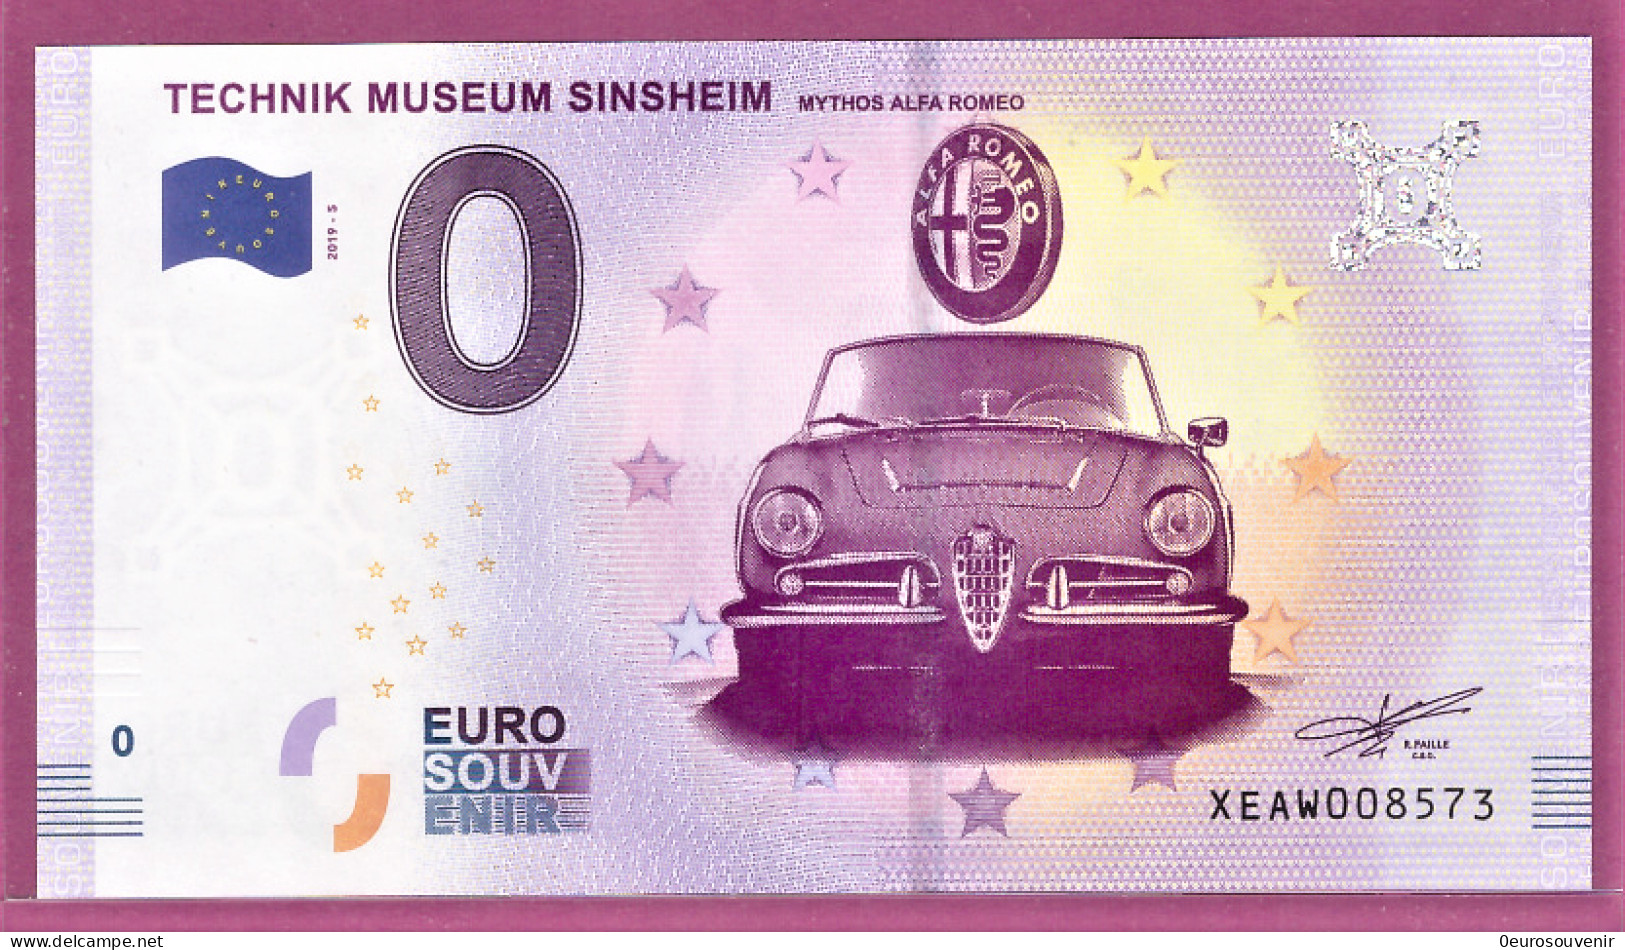 0-Euro XEAW 2019-5 TECHNIK MUSEUM SINSHEIM - MYTHOS ALFA ROMEO - Private Proofs / Unofficial